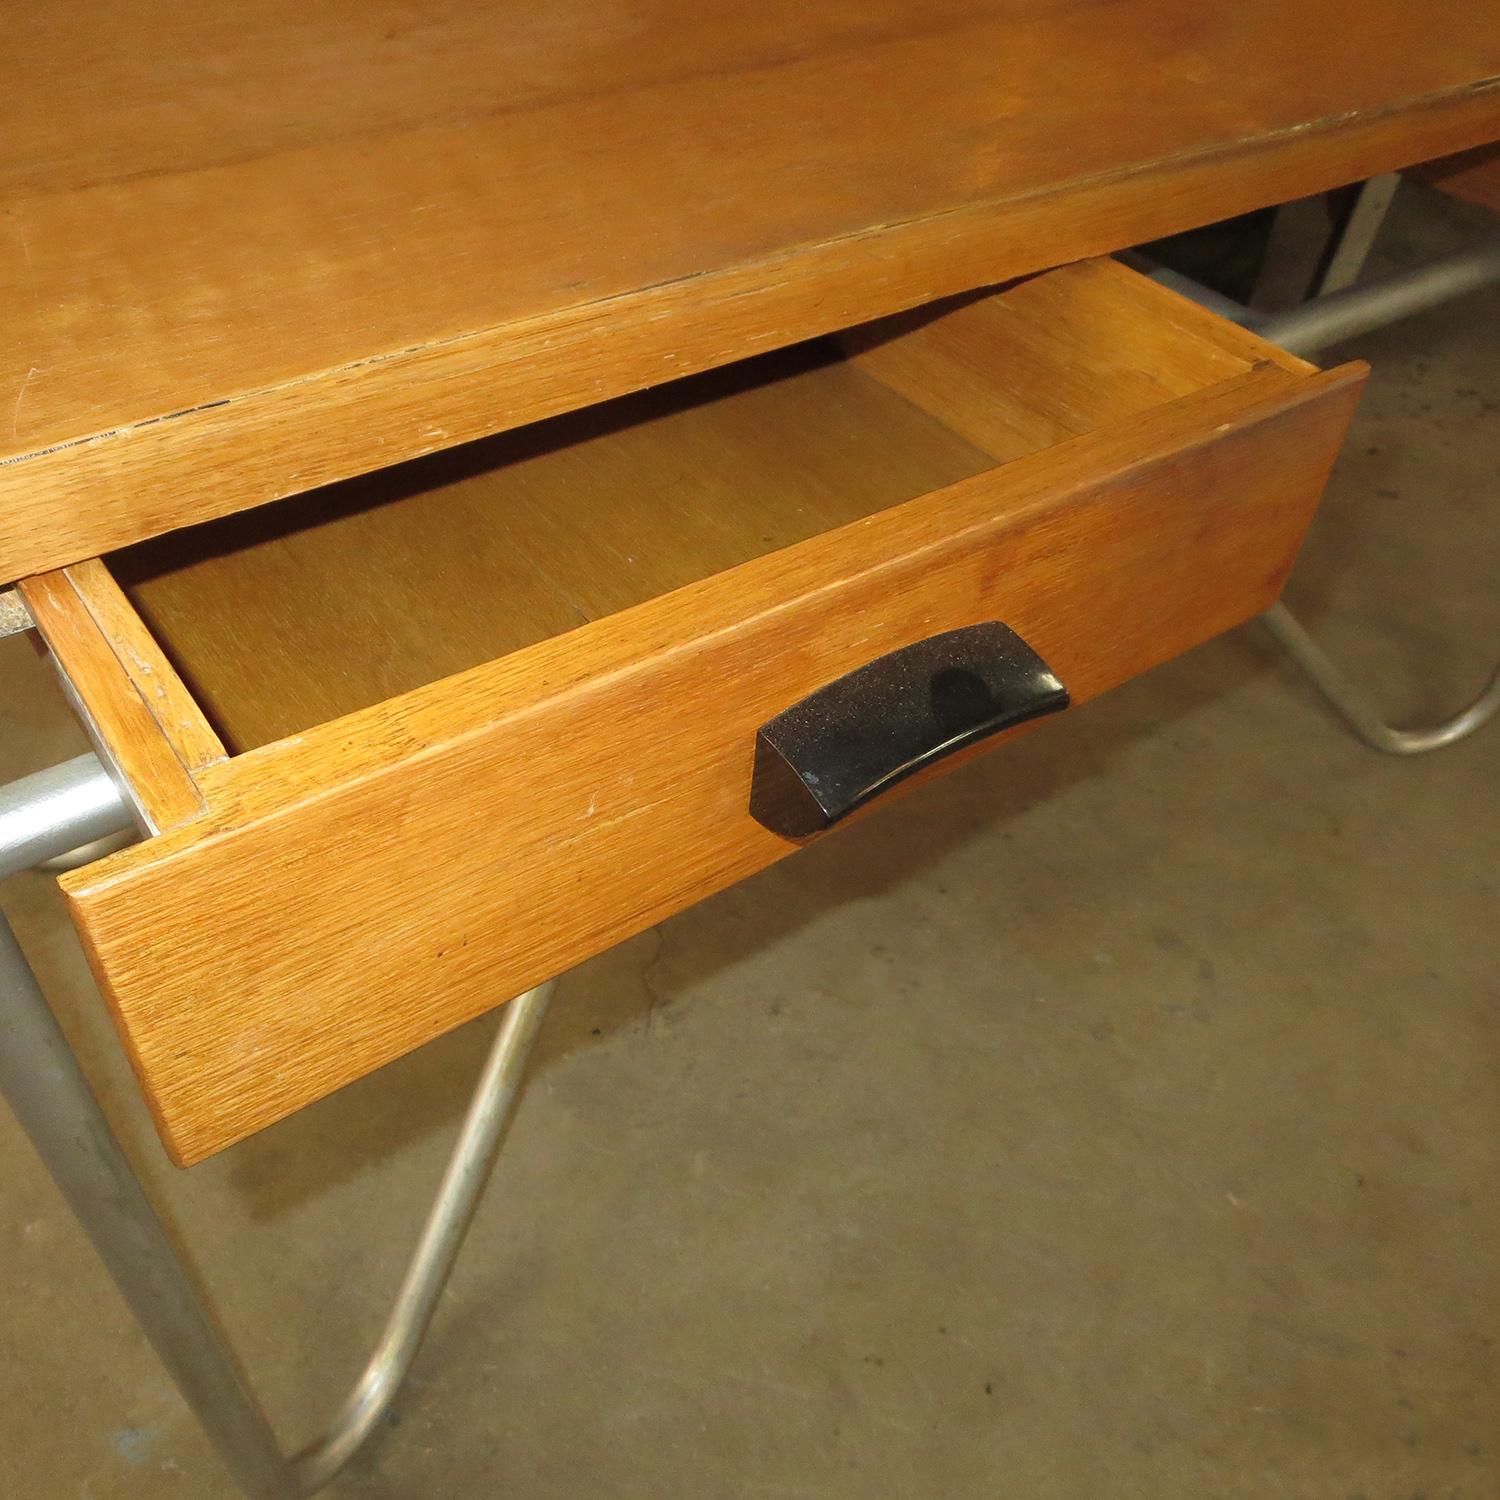 Lacquered Midcentury Desk with Tubular Base Design